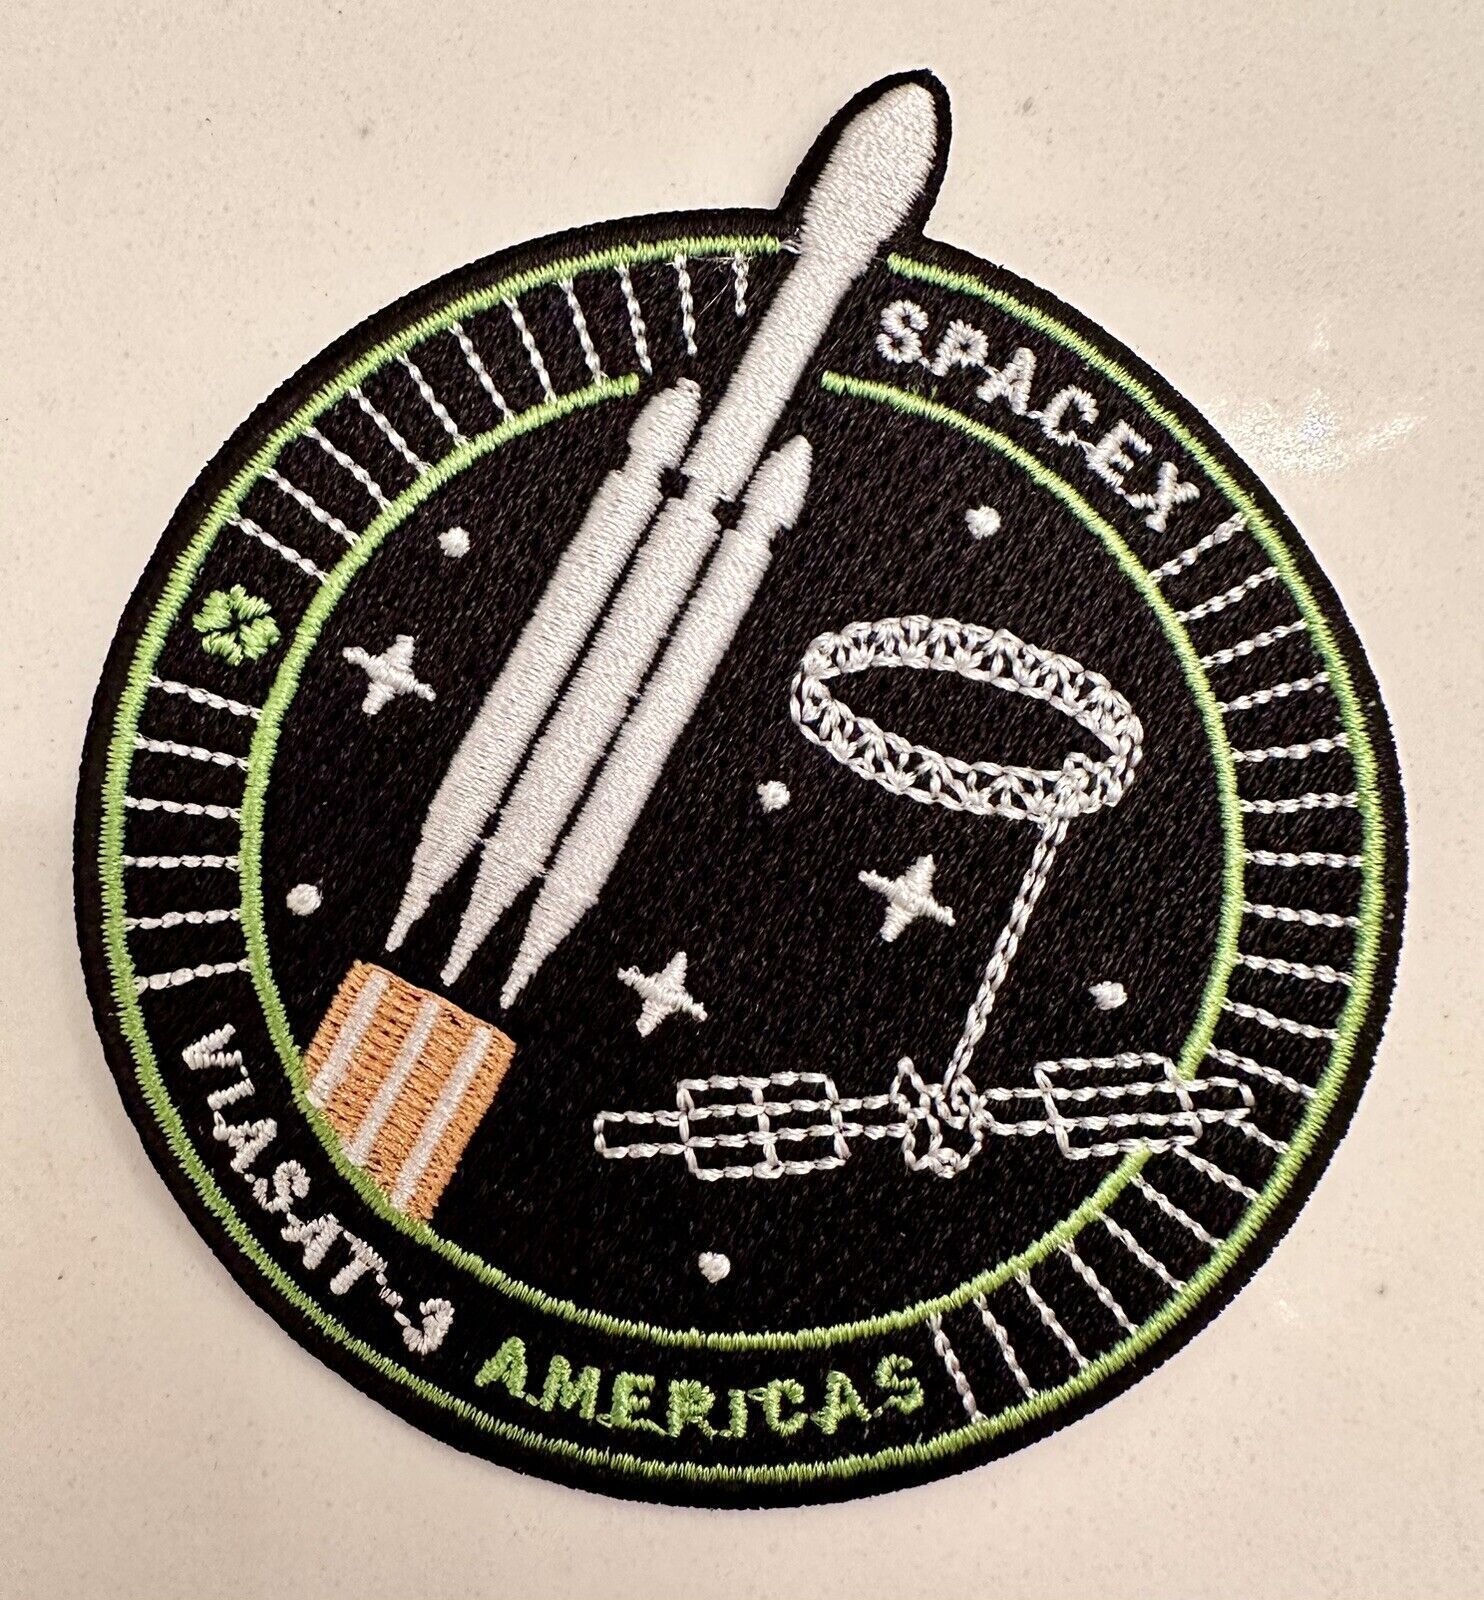 Original SpaceX VIA SAT 3 AMERICAS  FALCON 9 MISSION PATCH 3”